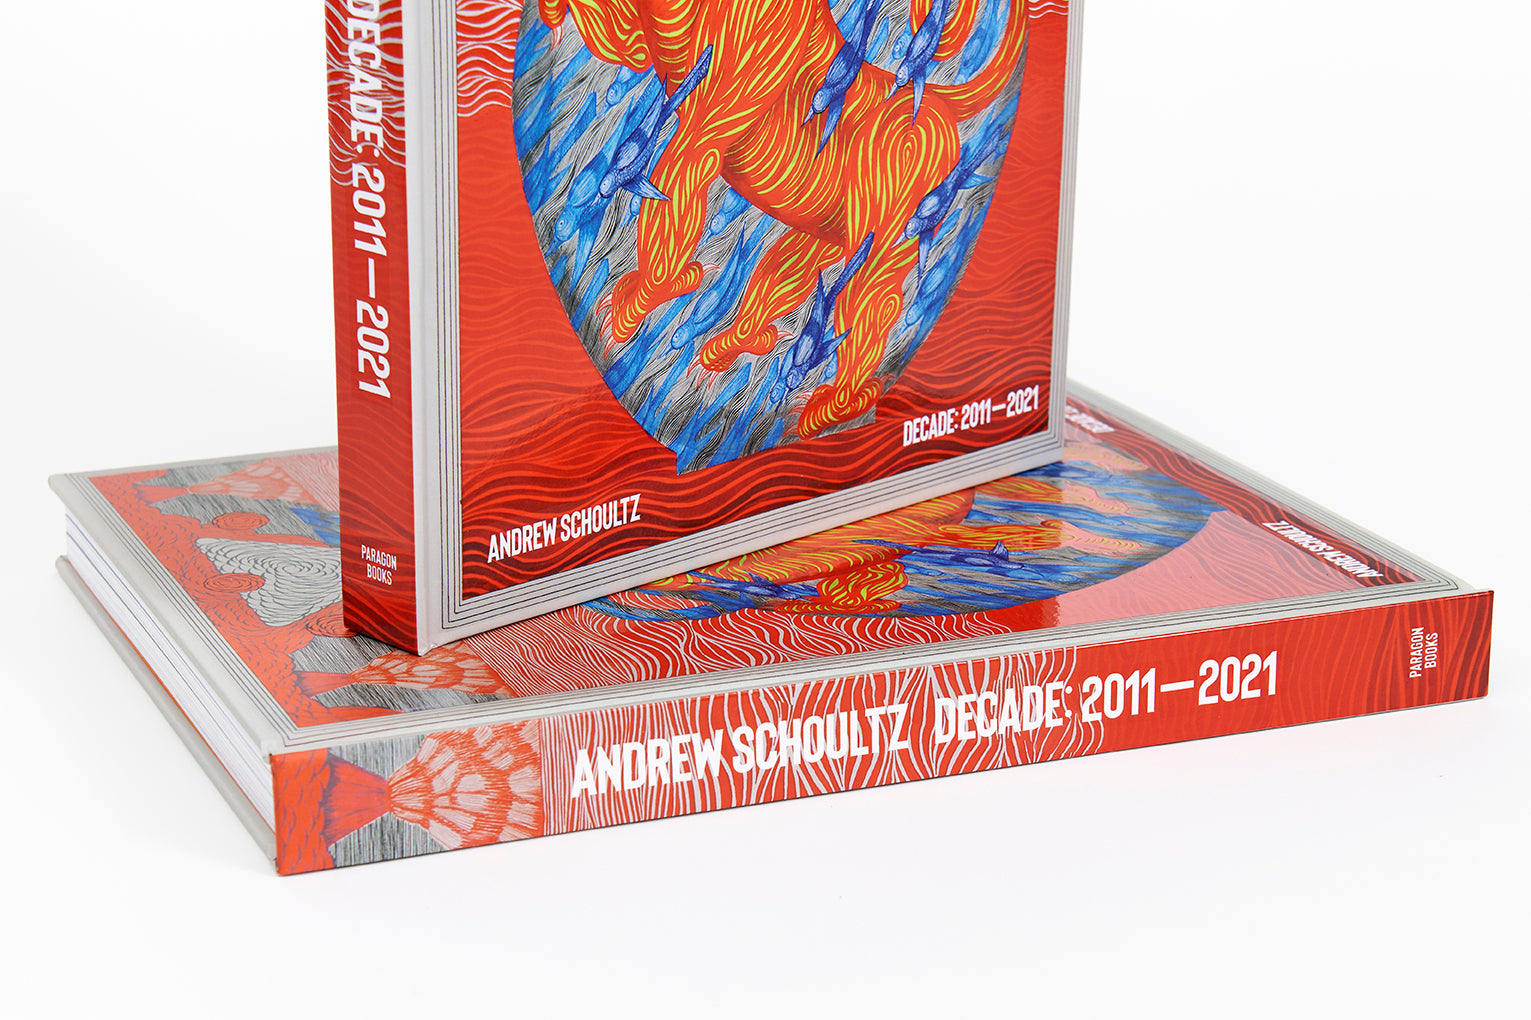 Andrew Schoultz monograph art book by Paragon Books